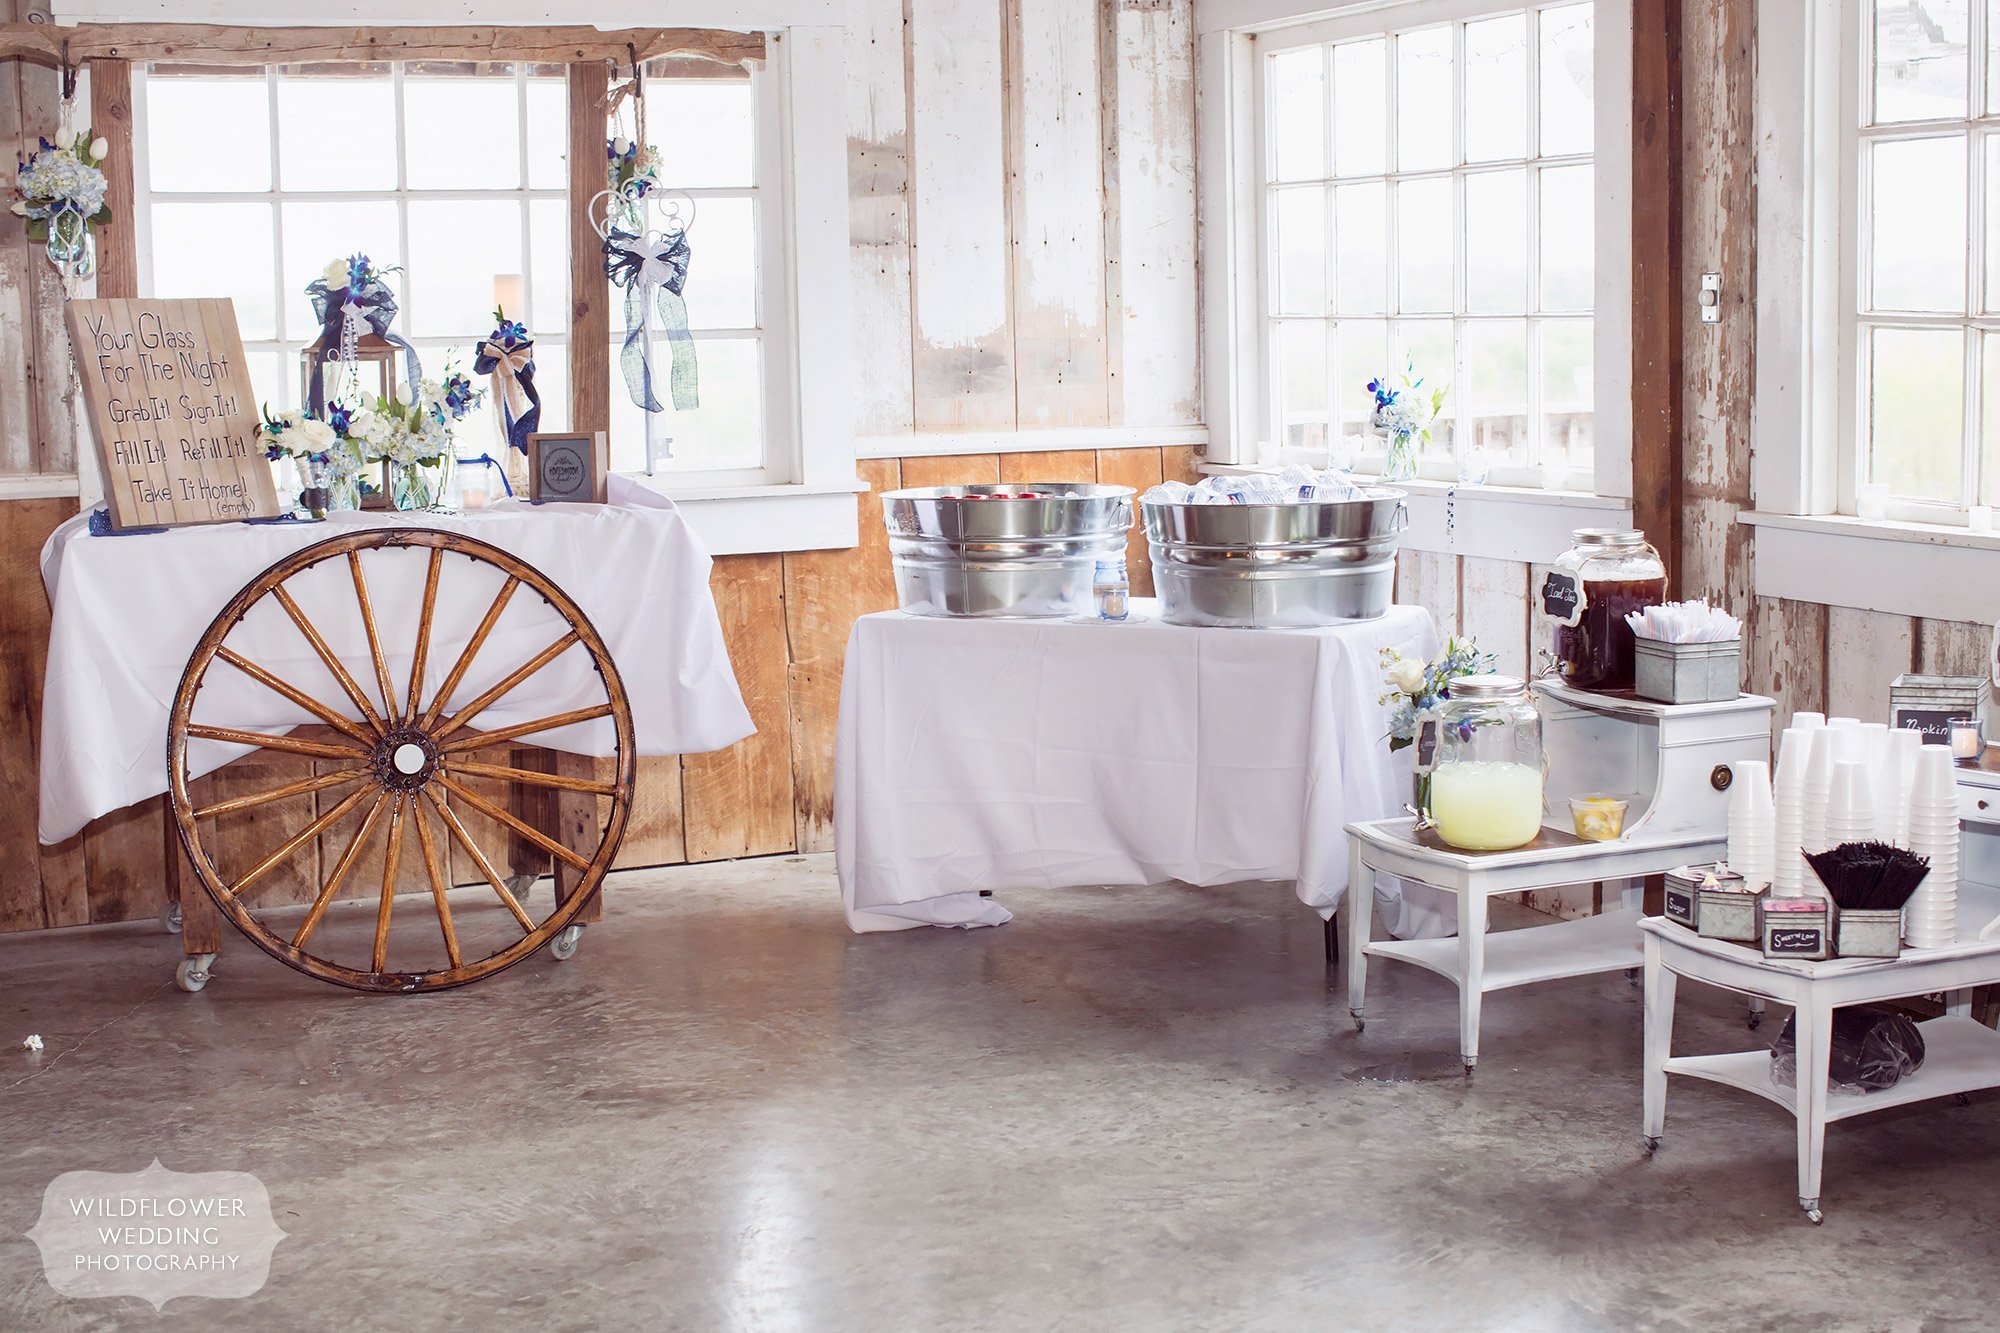 Great ideas for farm wedding decor with a wagon wheel and lemonade table.